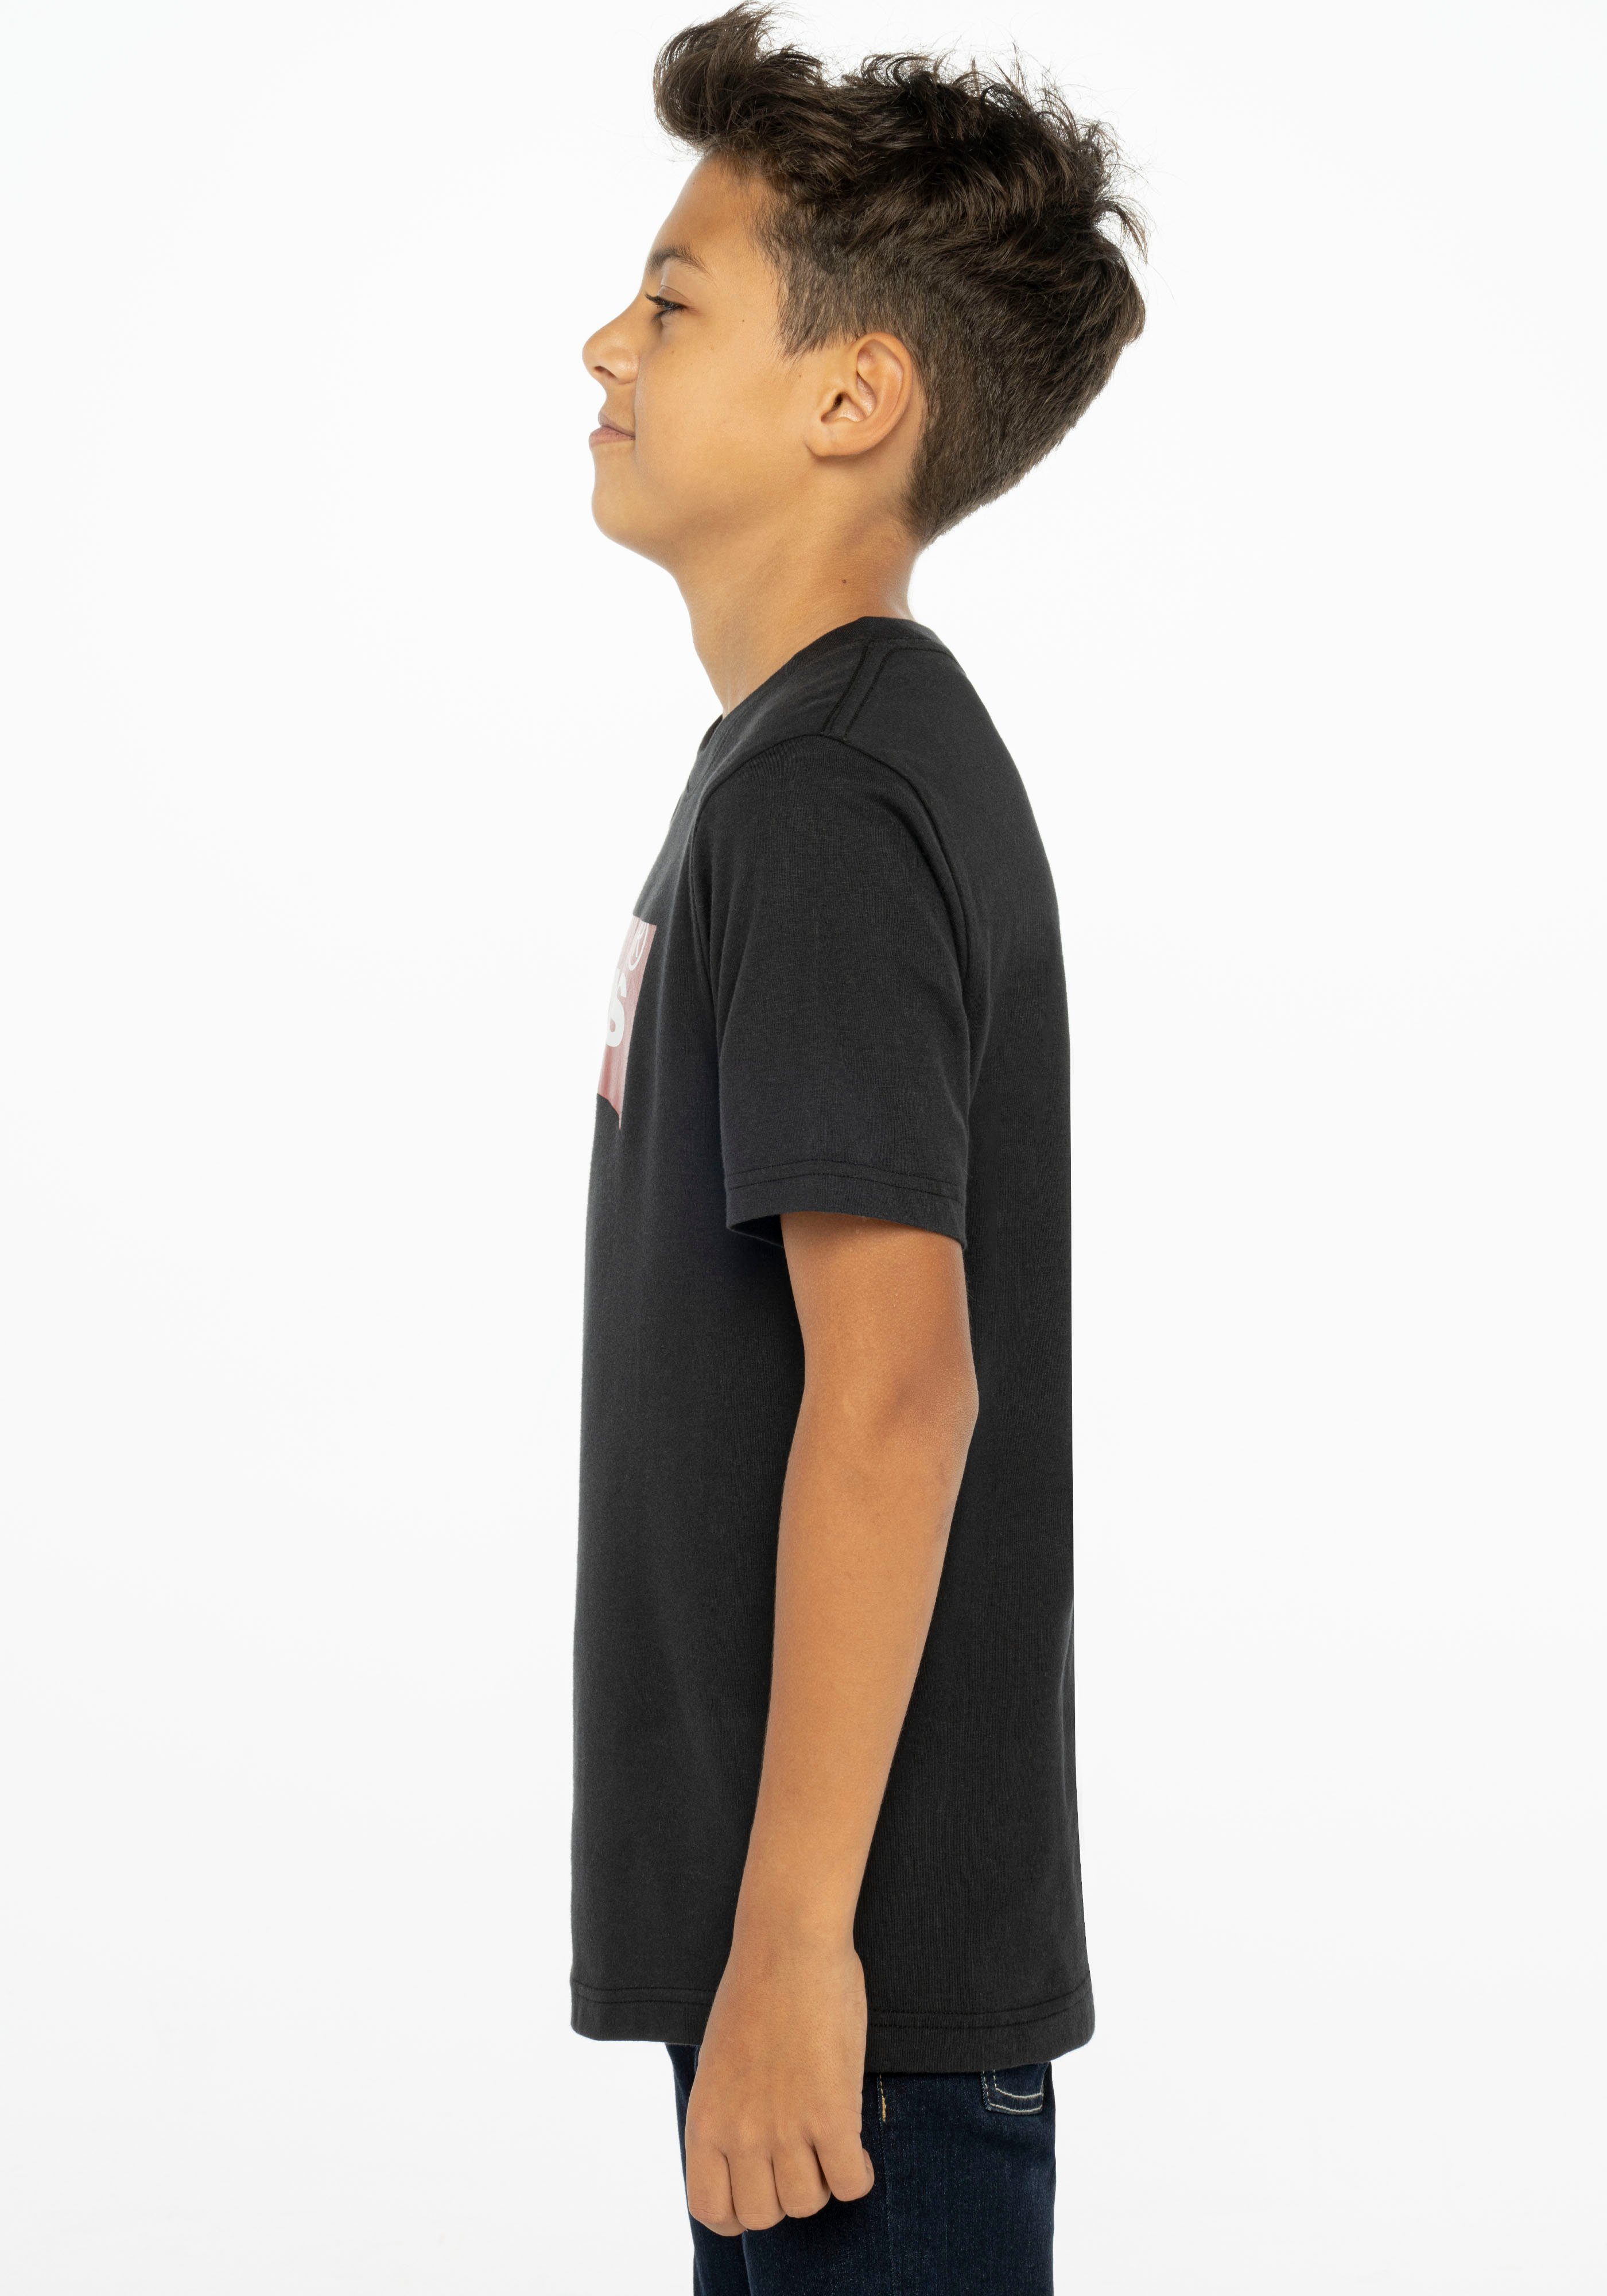 Levi's® Kids T-Shirt LVB BATWING TEE black BOYS for